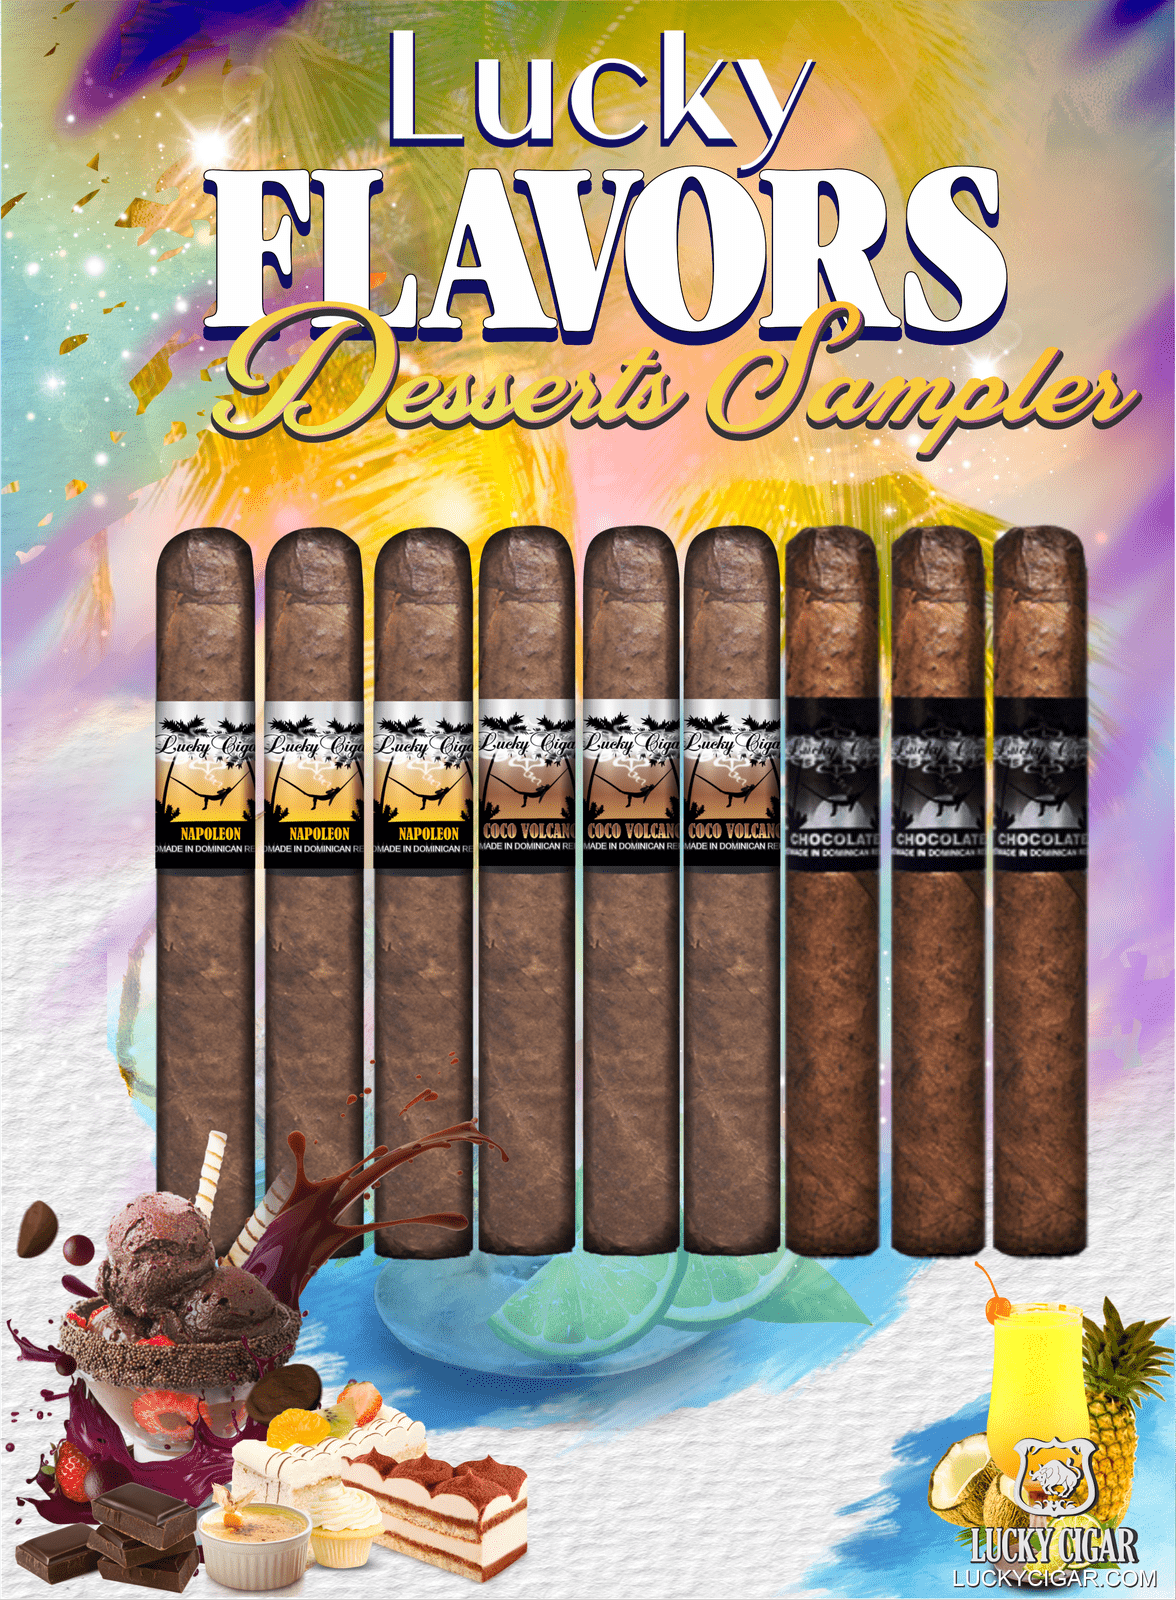 Flavored Cigars: Lucky Flavors 9 Piece Desserts Sampler - Napoleon, Coco Volcano, Chocolate 3 Napoleon 5x42 Cigars 3 Coco Volcano 5x42 Cigars 3 Chocolate 5x42 Cigars